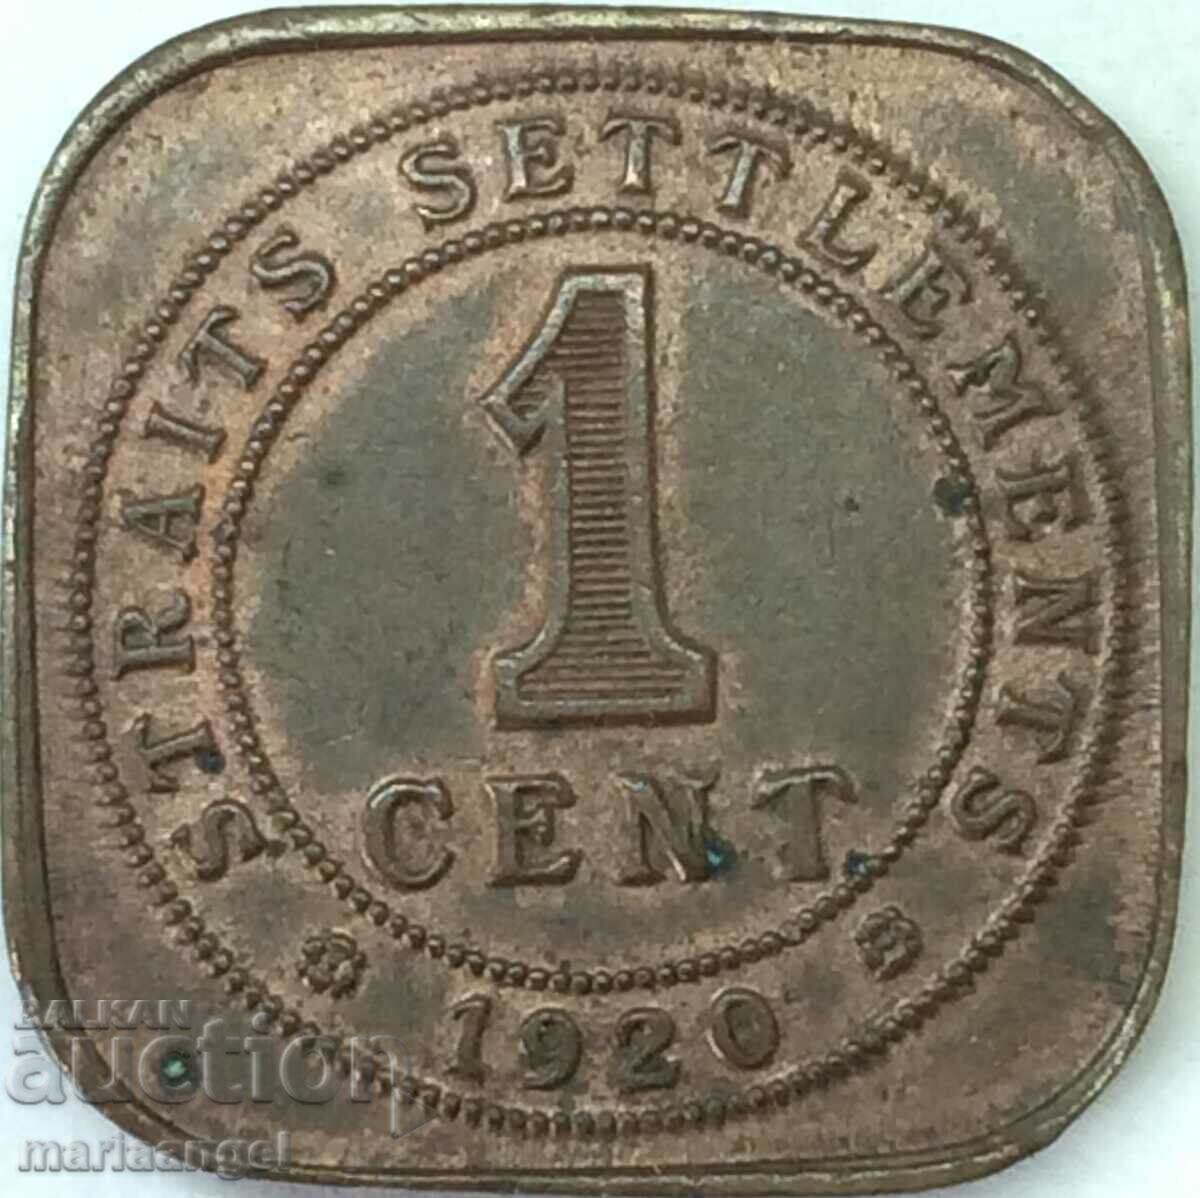 Стрейтс Сетлмент 1 цент 1920 5,77г бронз